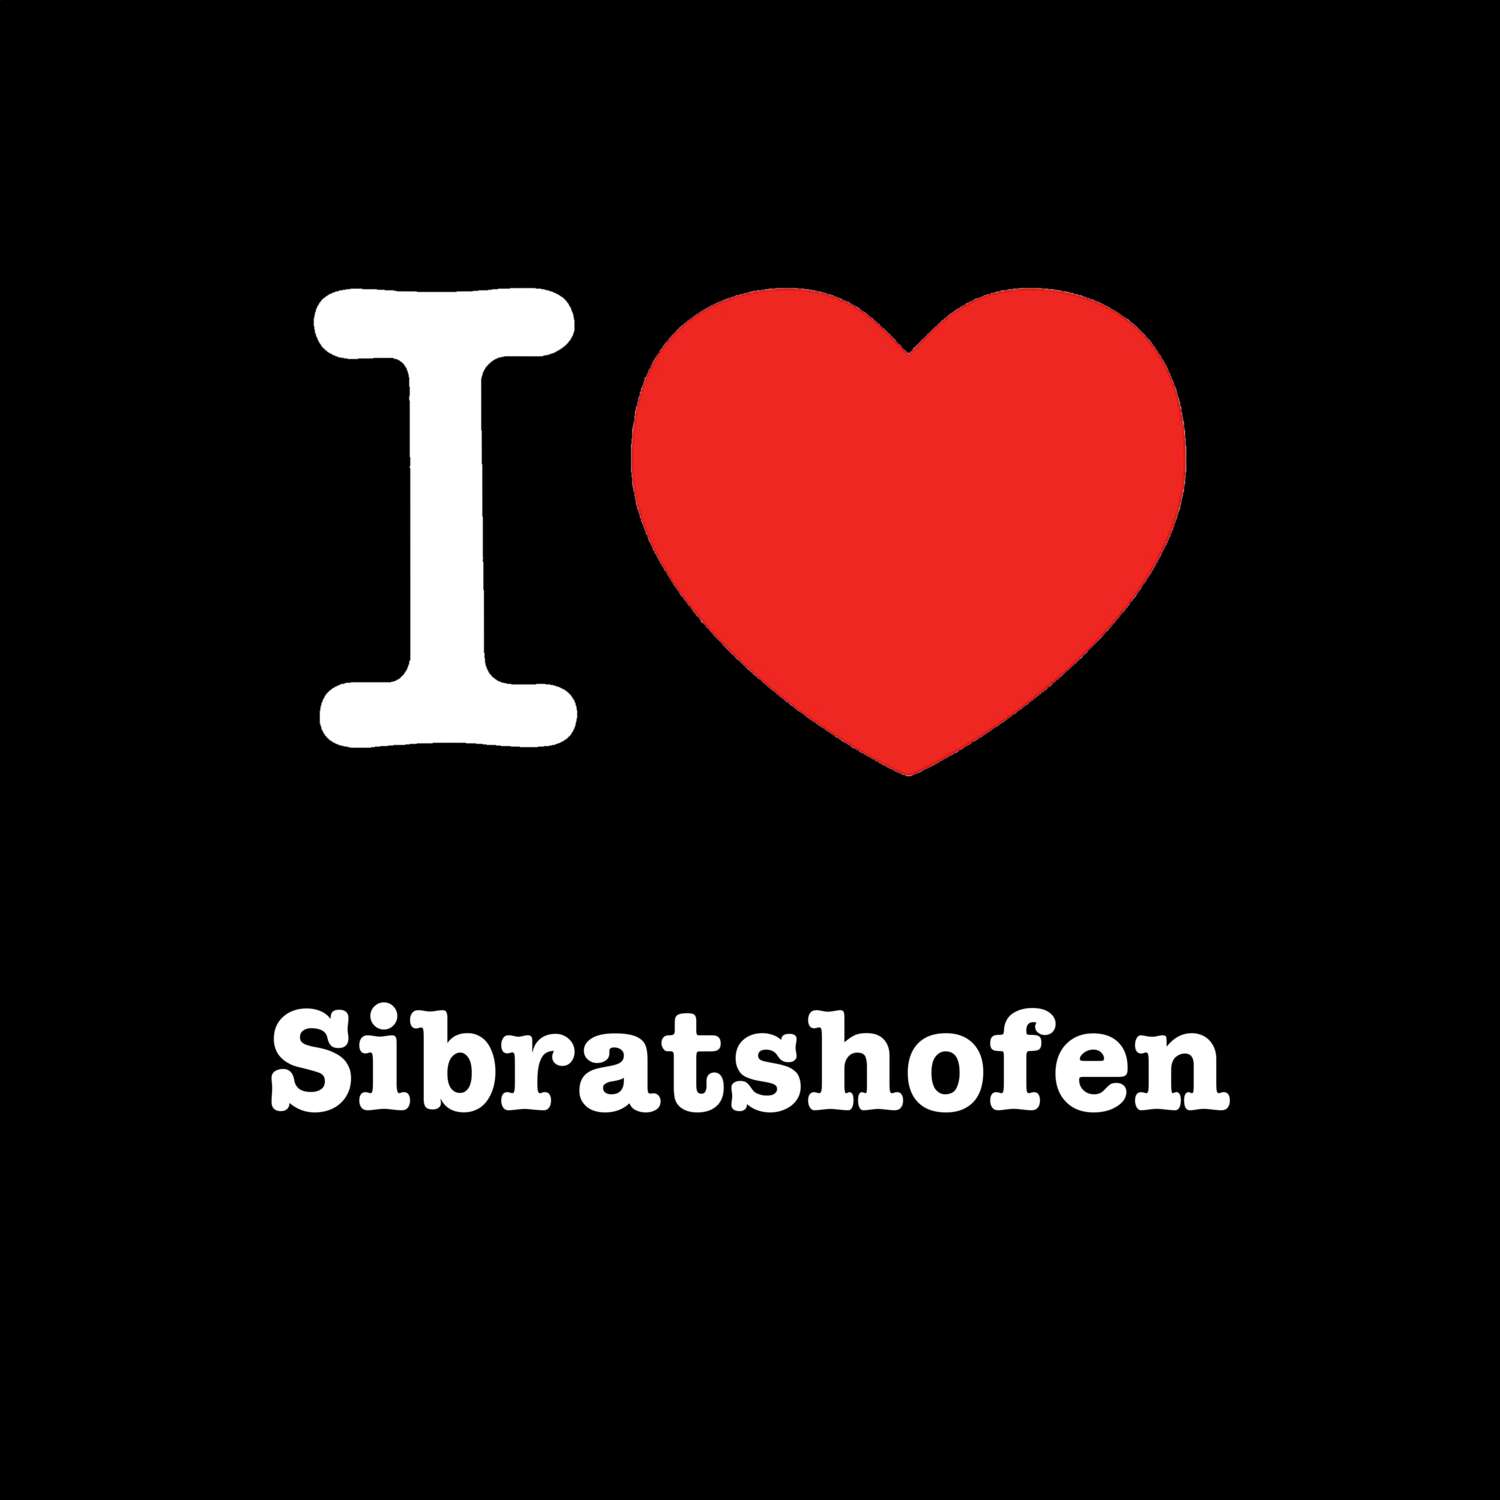 Sibratshofen T-Shirt »I love«